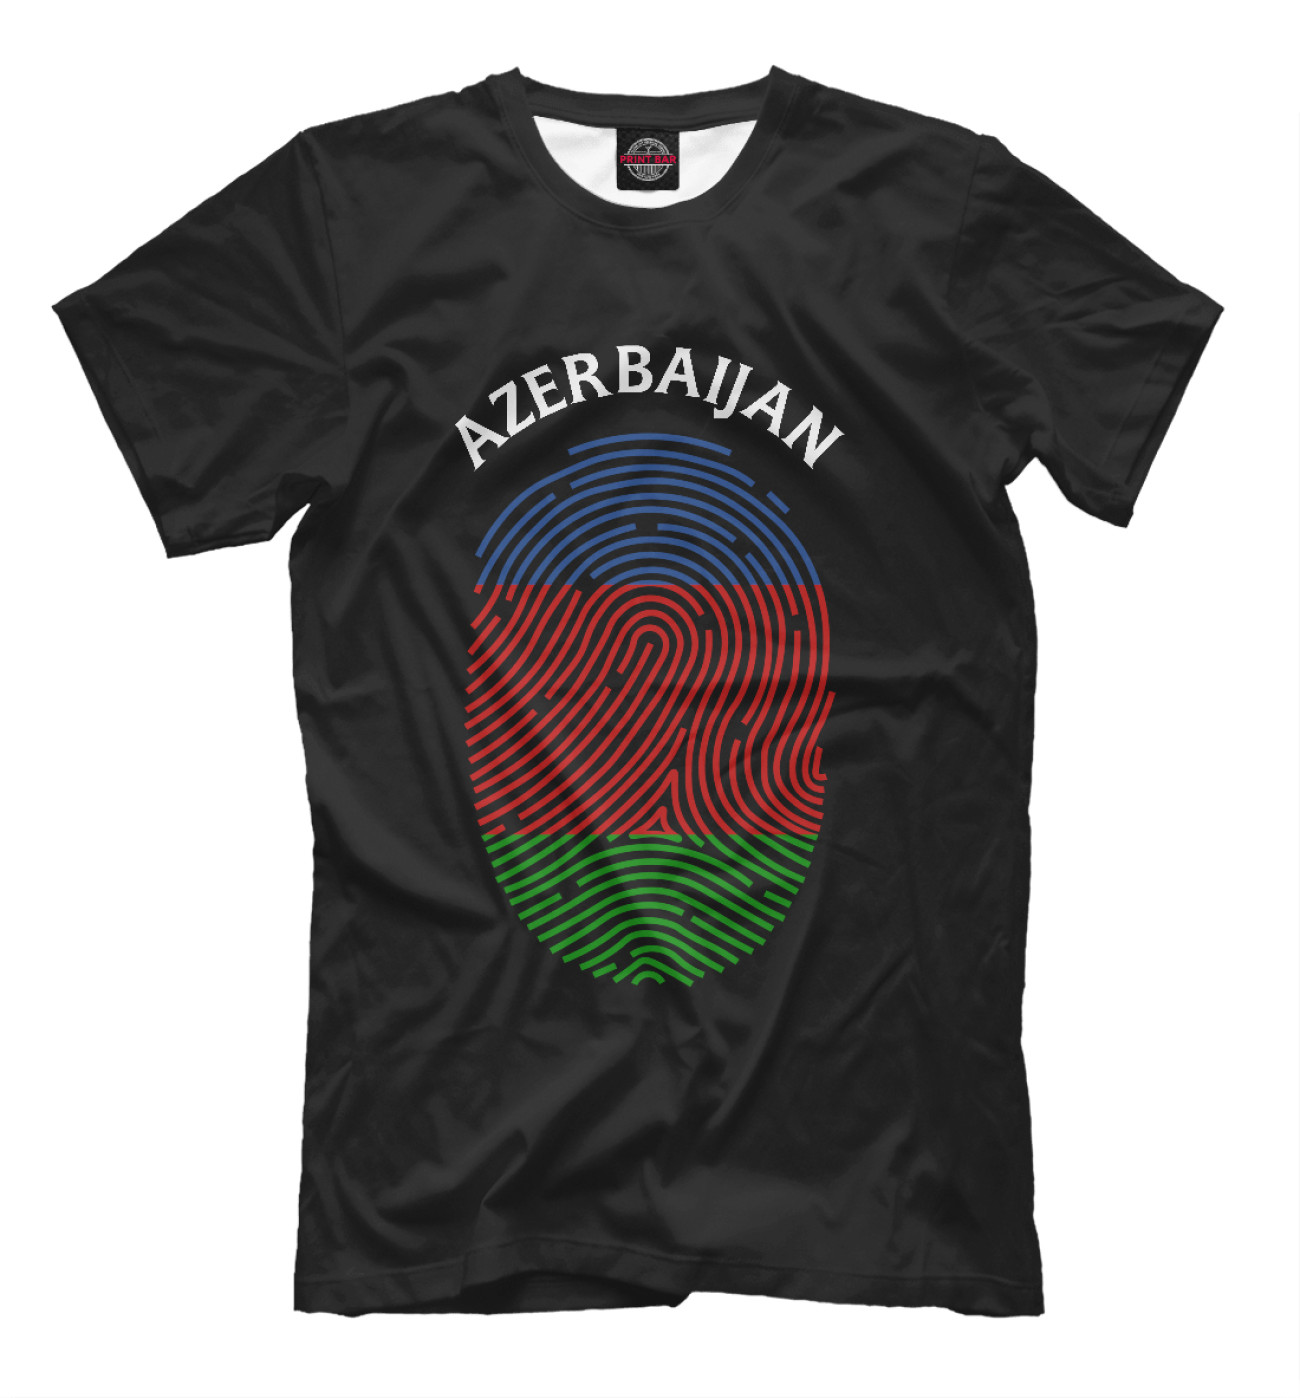 Мужская Футболка Азербайджан, артикул: AZR-715305-fut-2